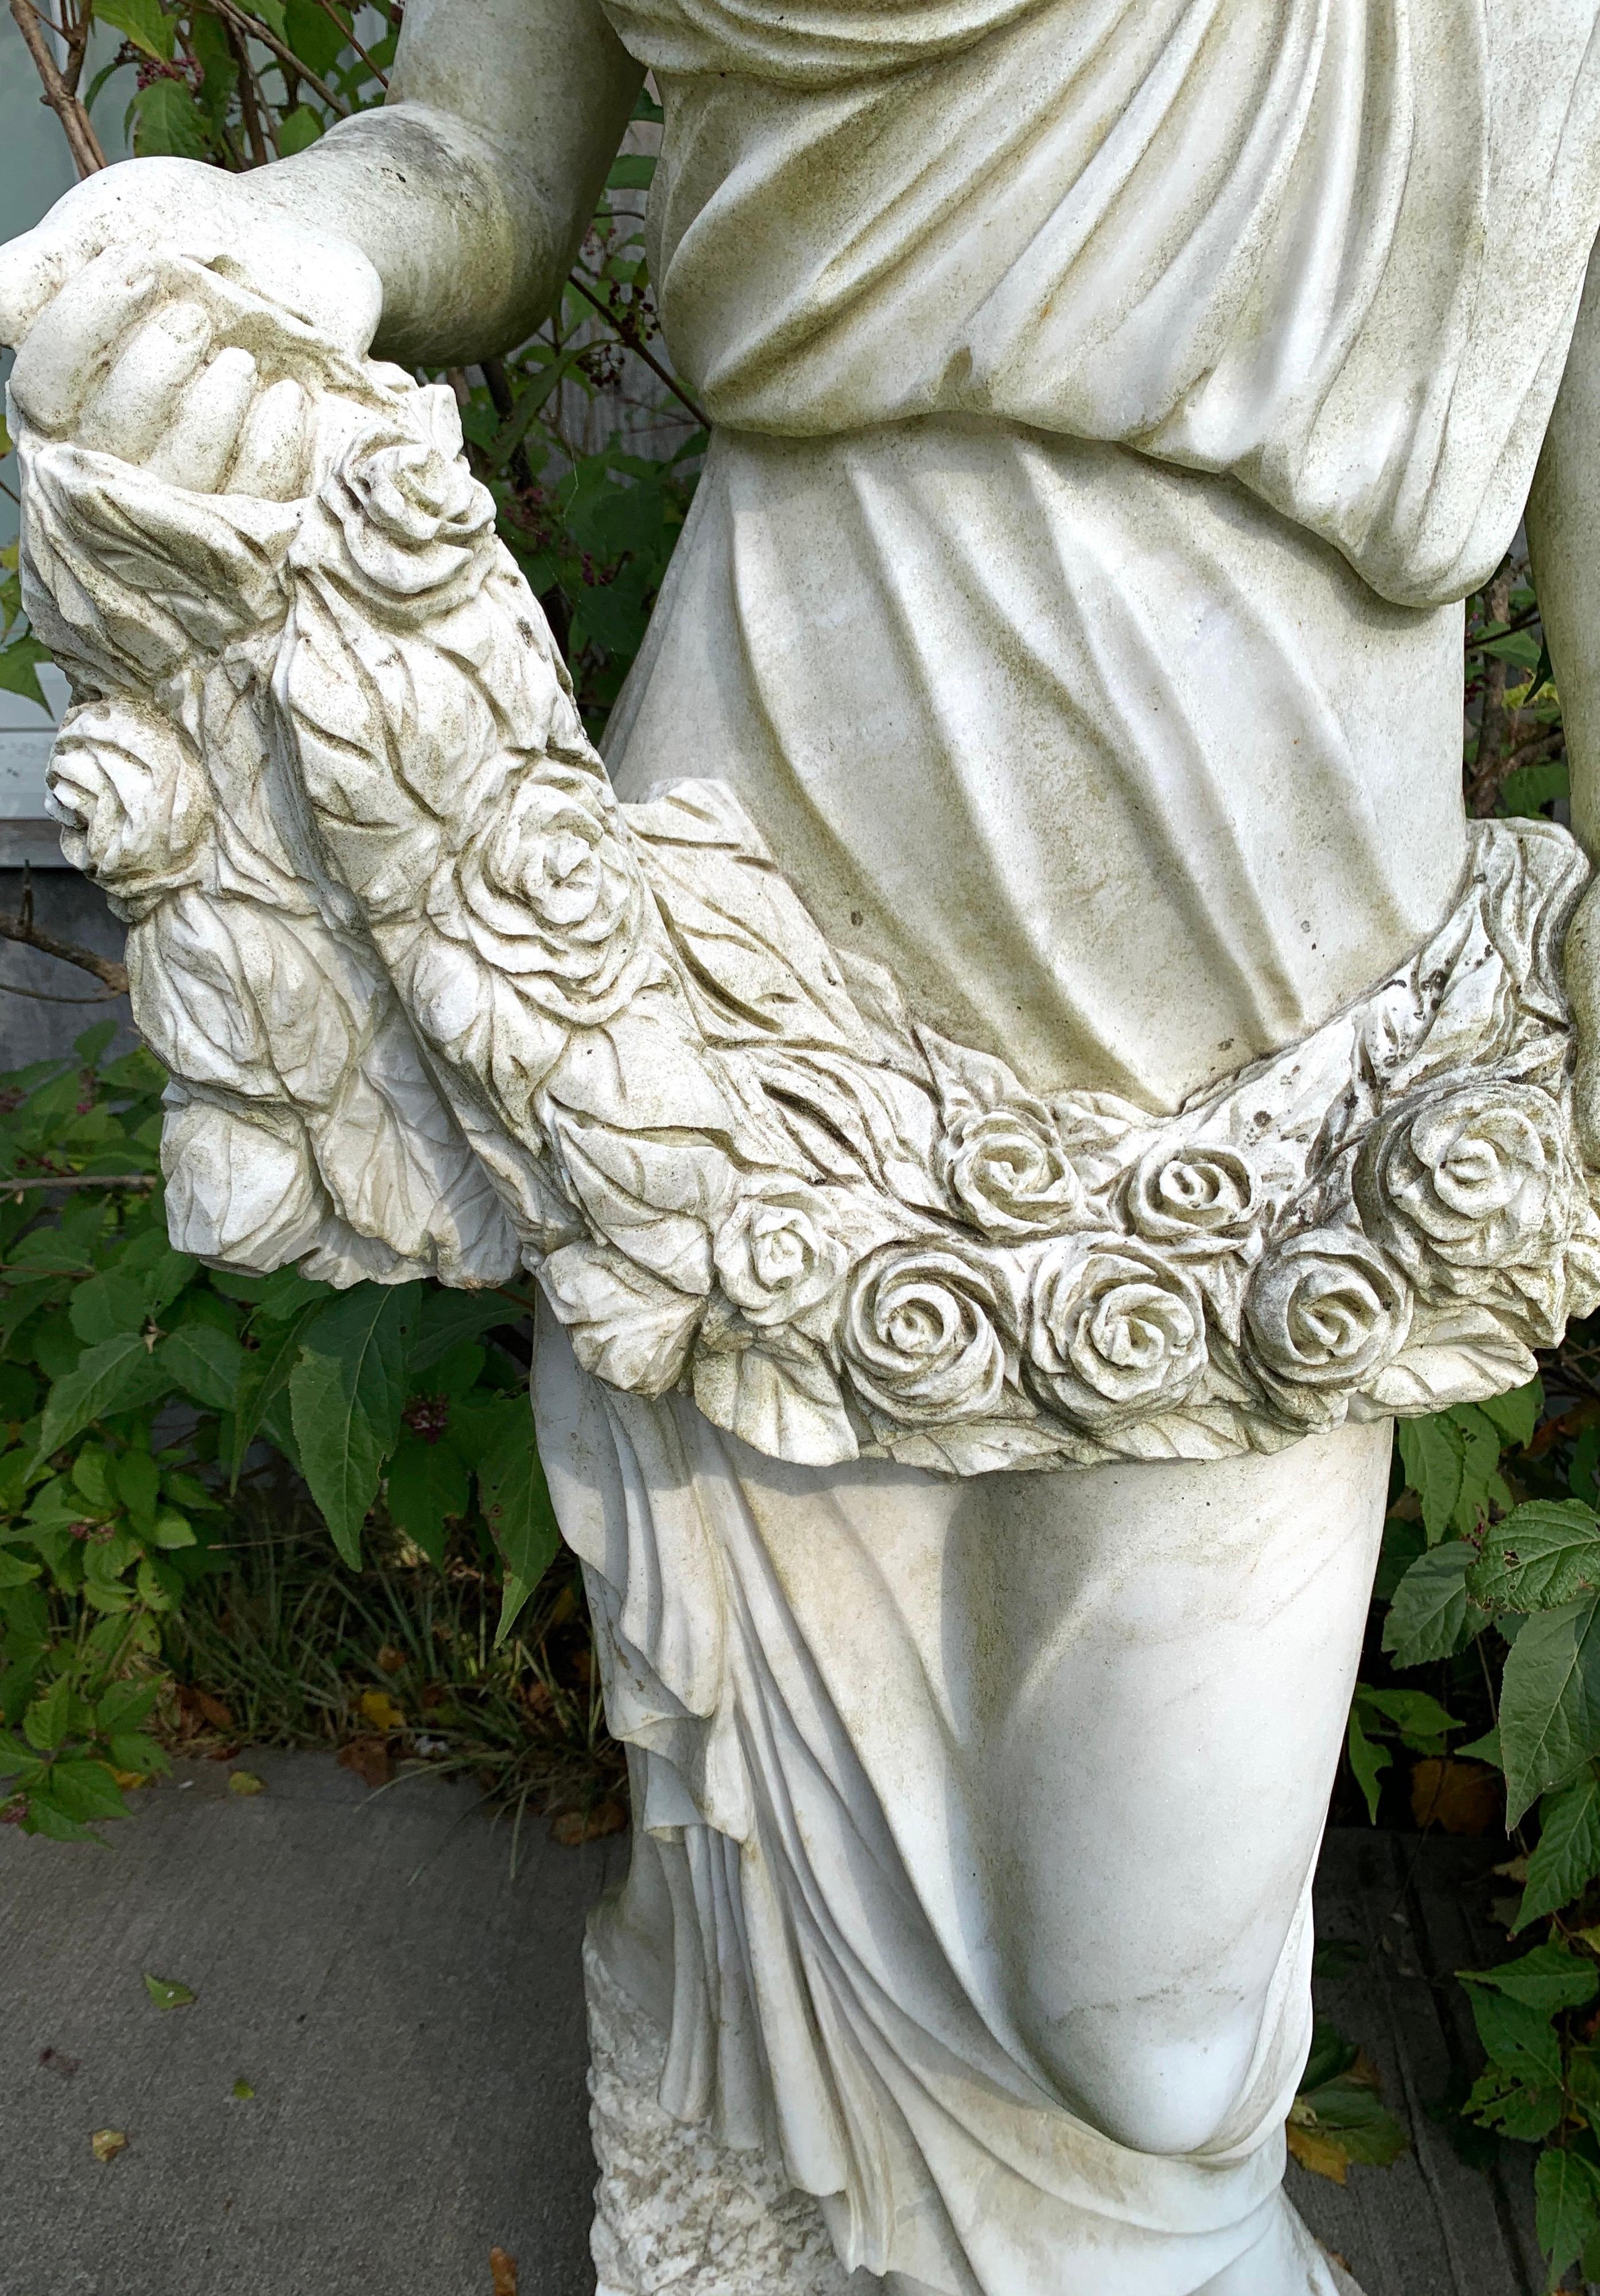 griechische göttinnen statuen